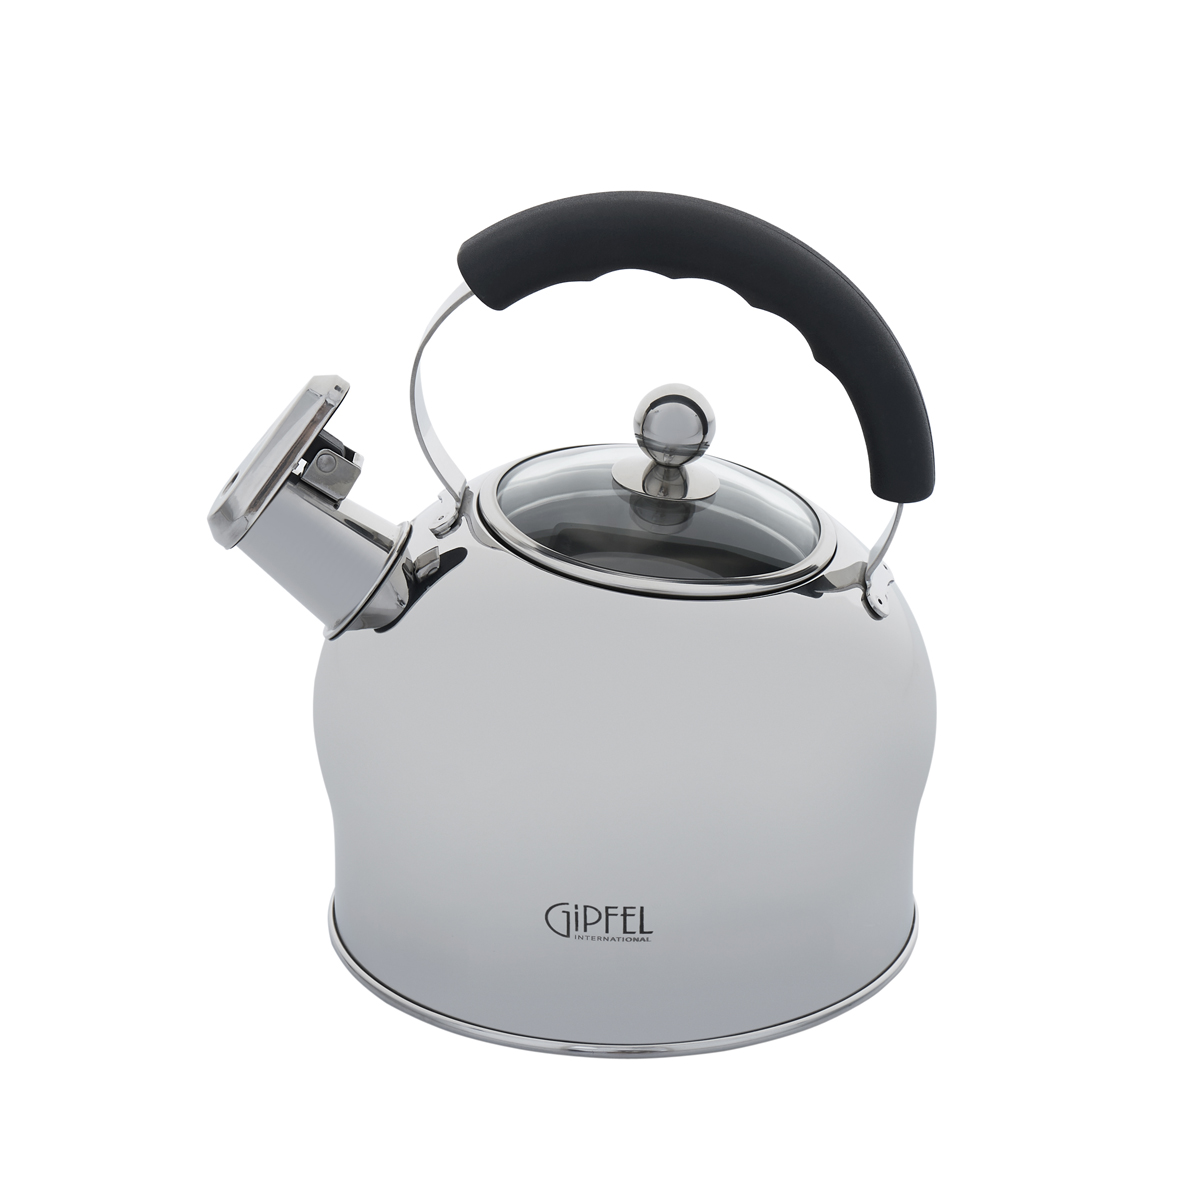 Чайник для плиты Gipfel Mattino 8605 чайник для плиты со свистком gipfel essen 8645 2 5 л